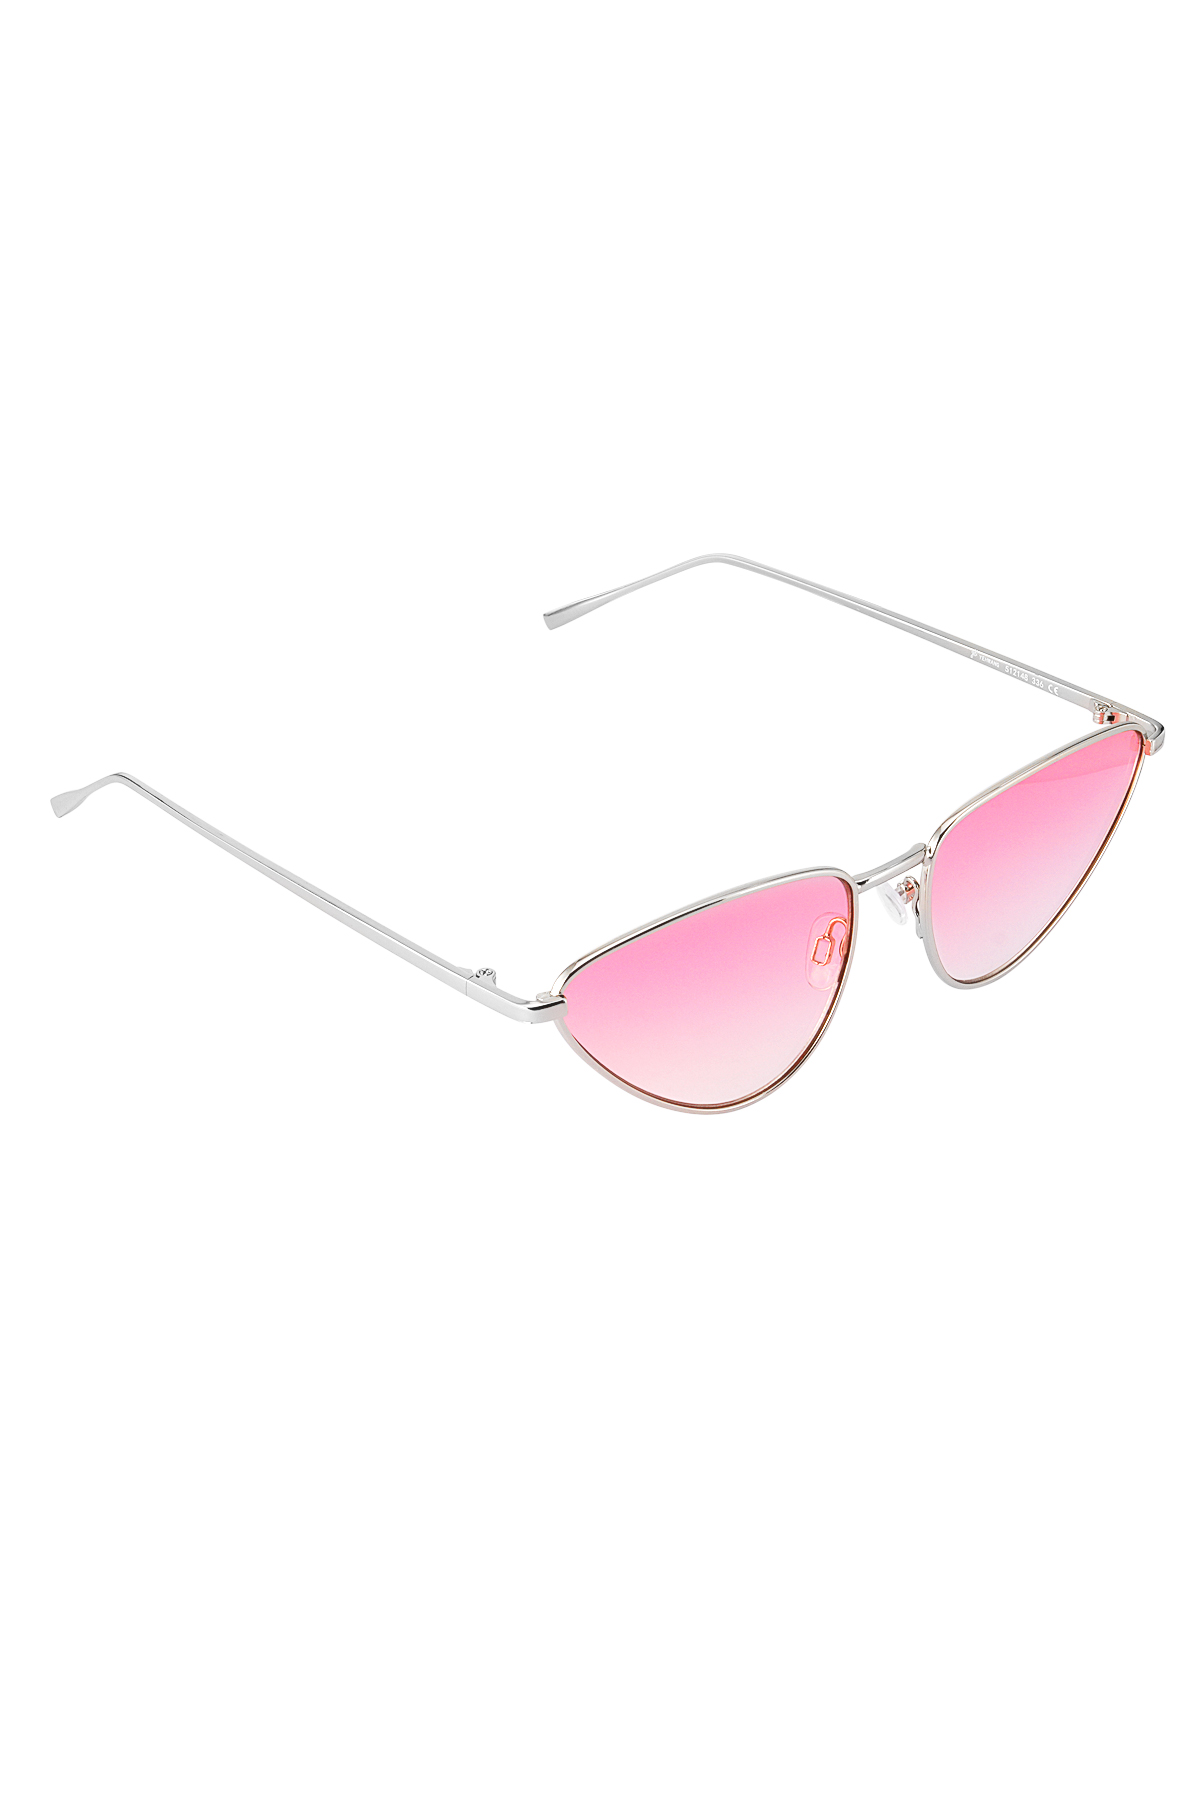 Sunglasses ready to shine - pink